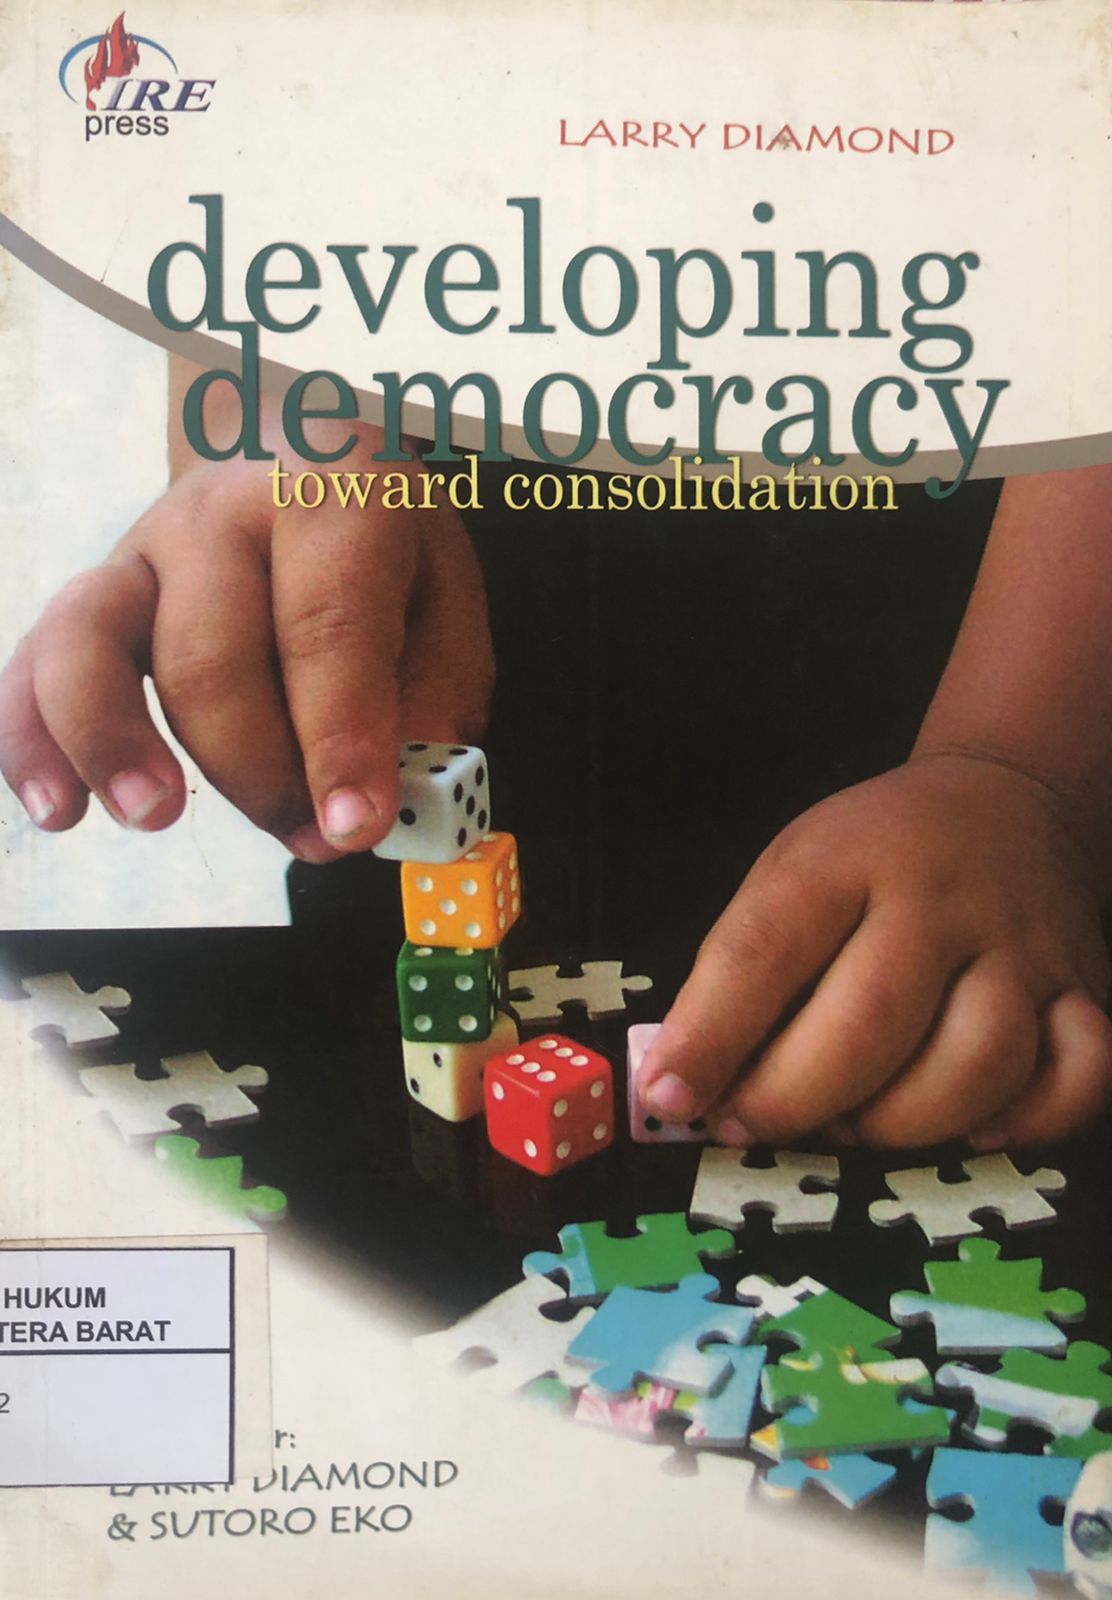 Developing Democracy (toward consolidation)